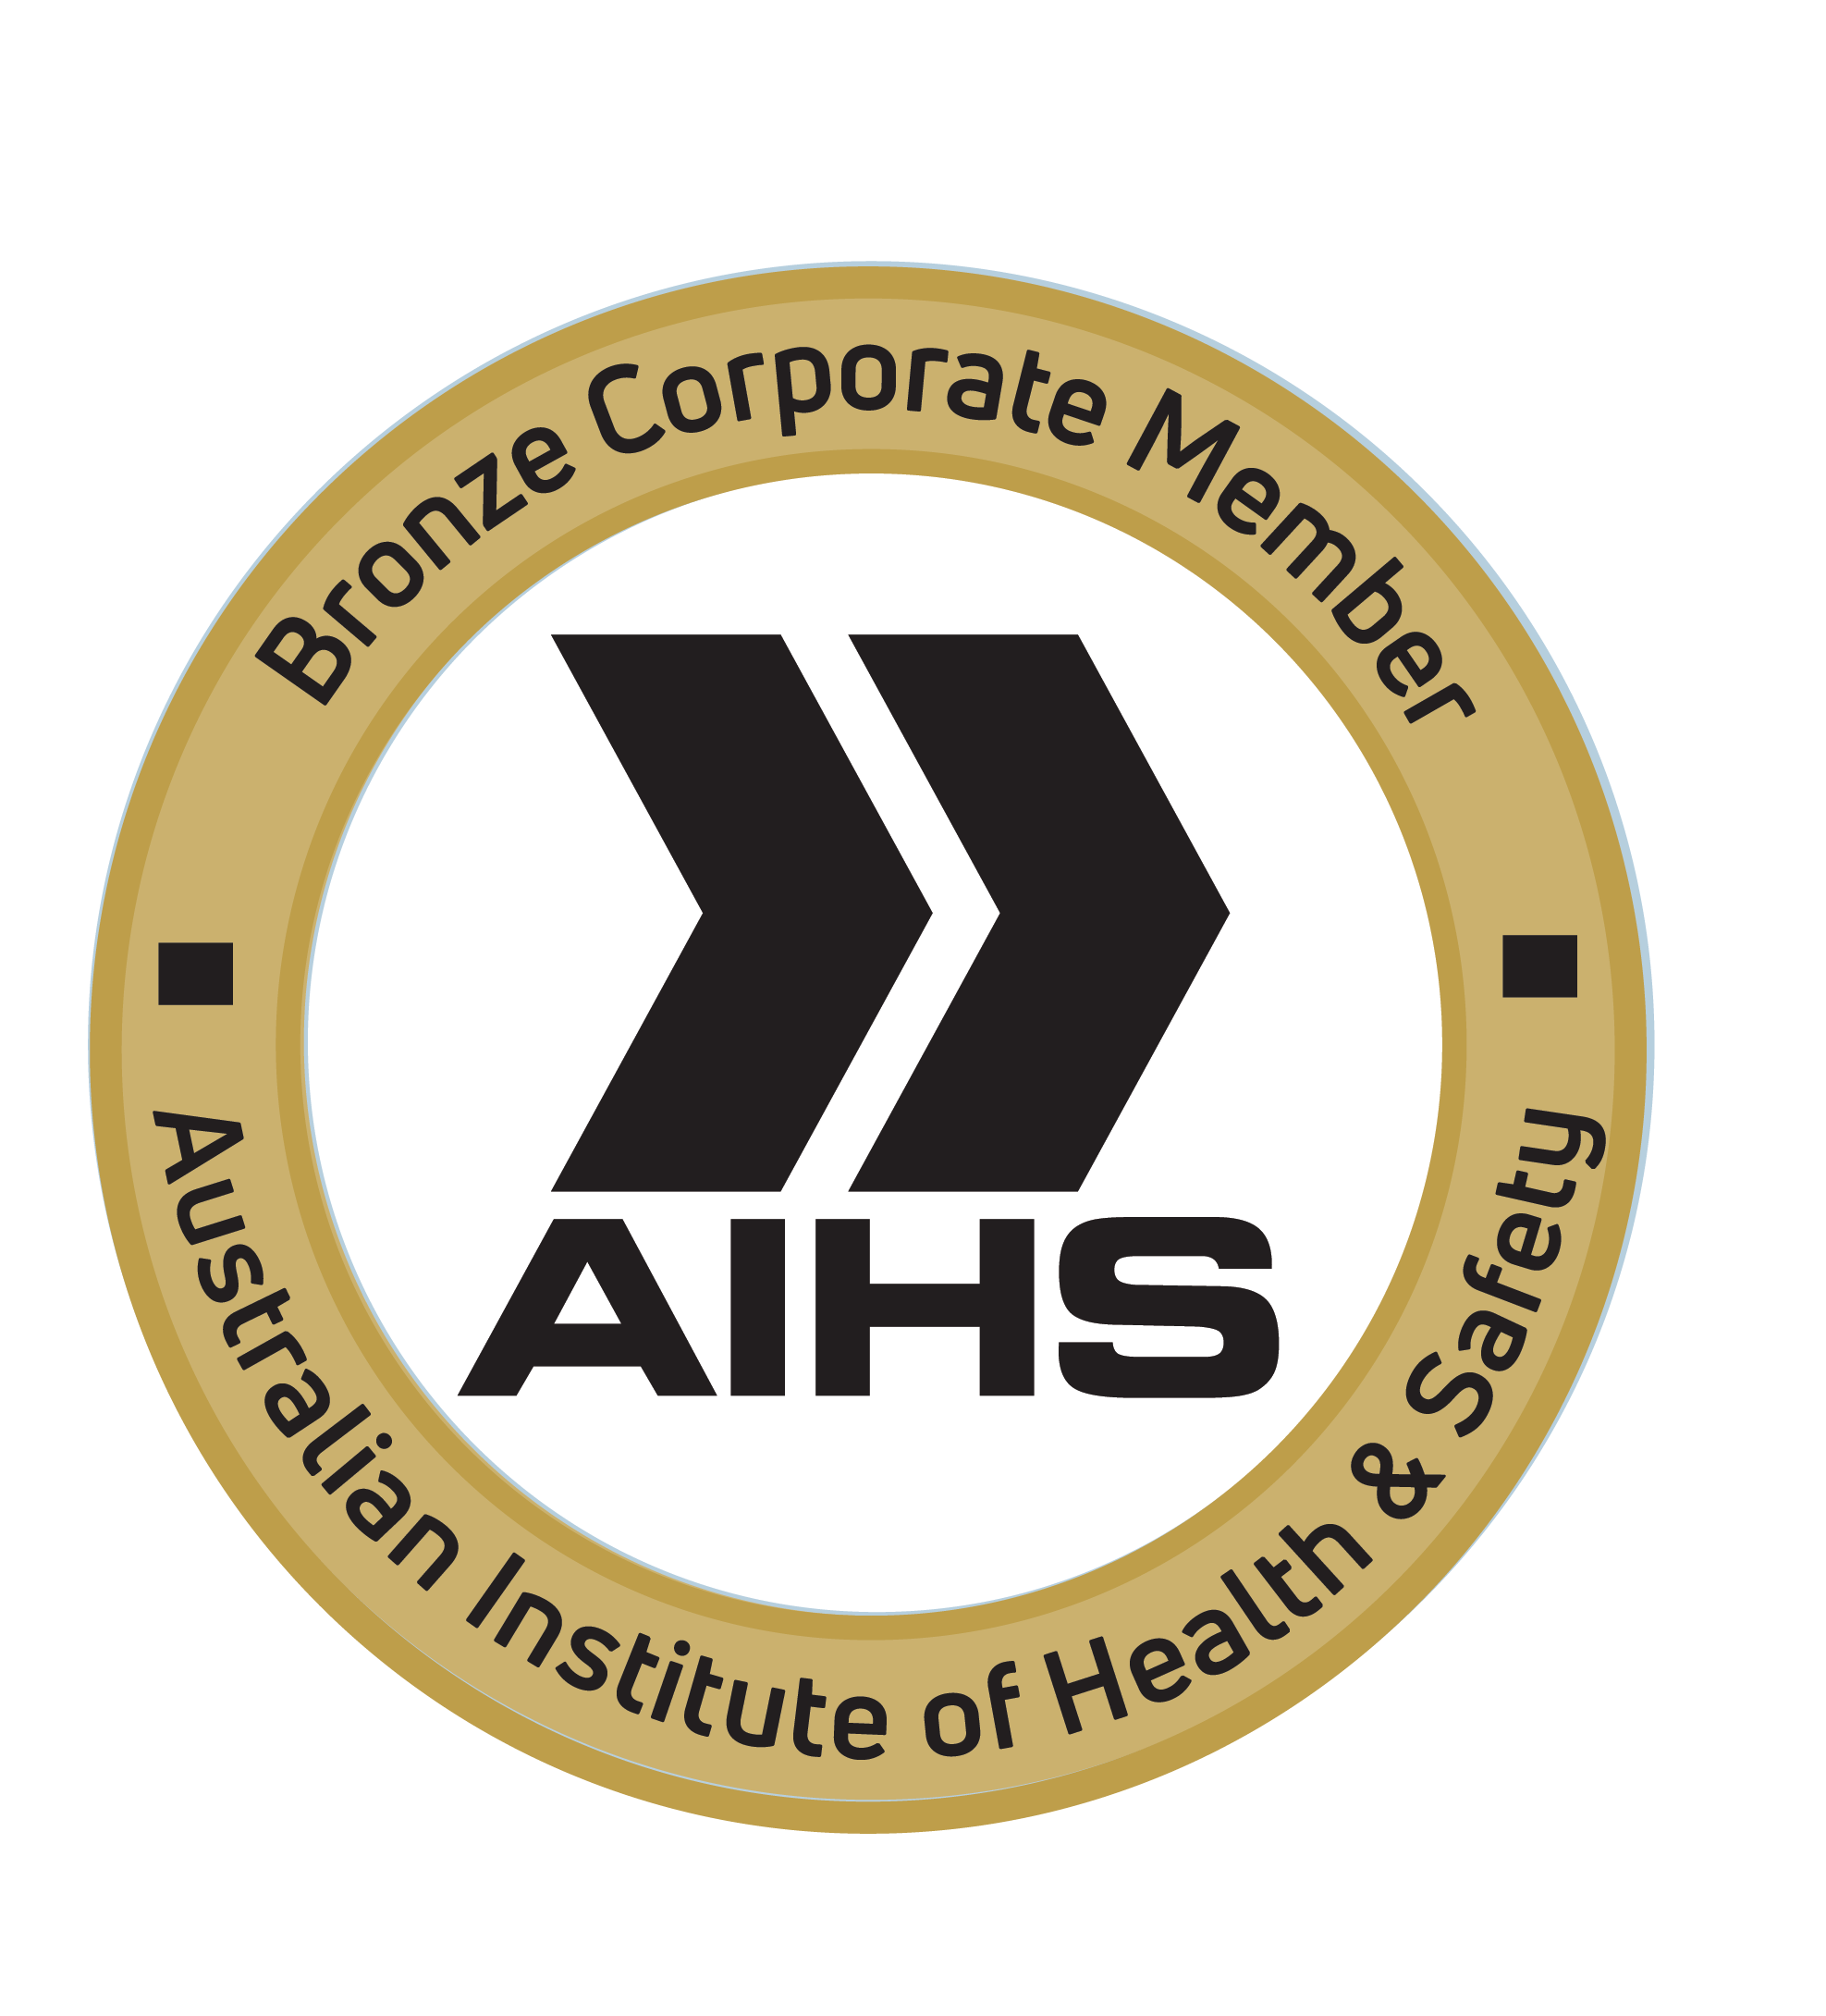 AIHS Corporate Member Logo Bronze